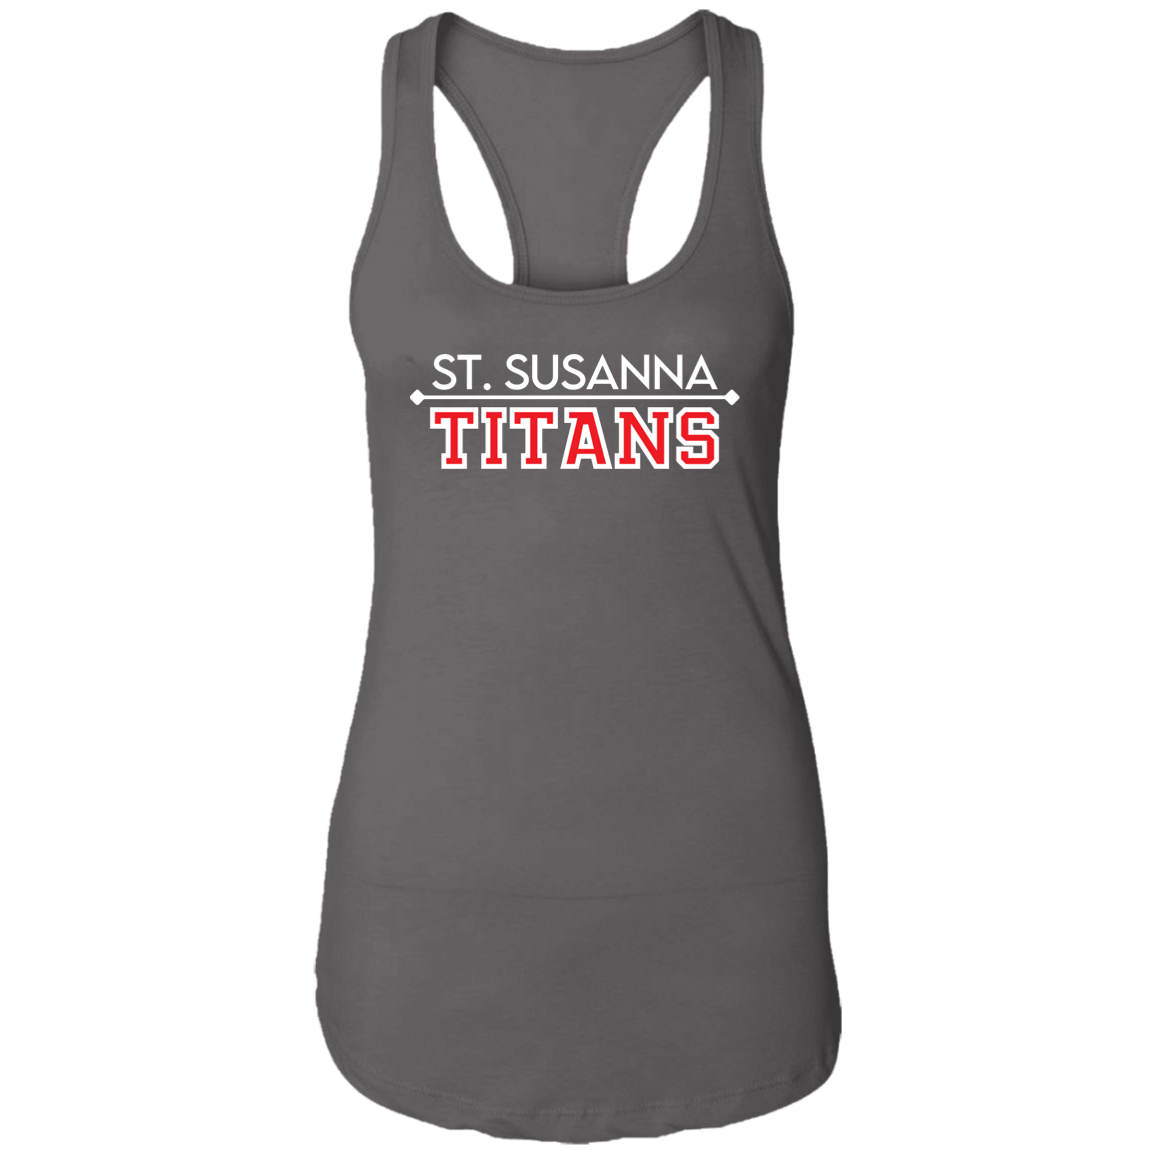 St. Susanna Titans (Blk / Gray) Ladies Ideal Racerback Tank